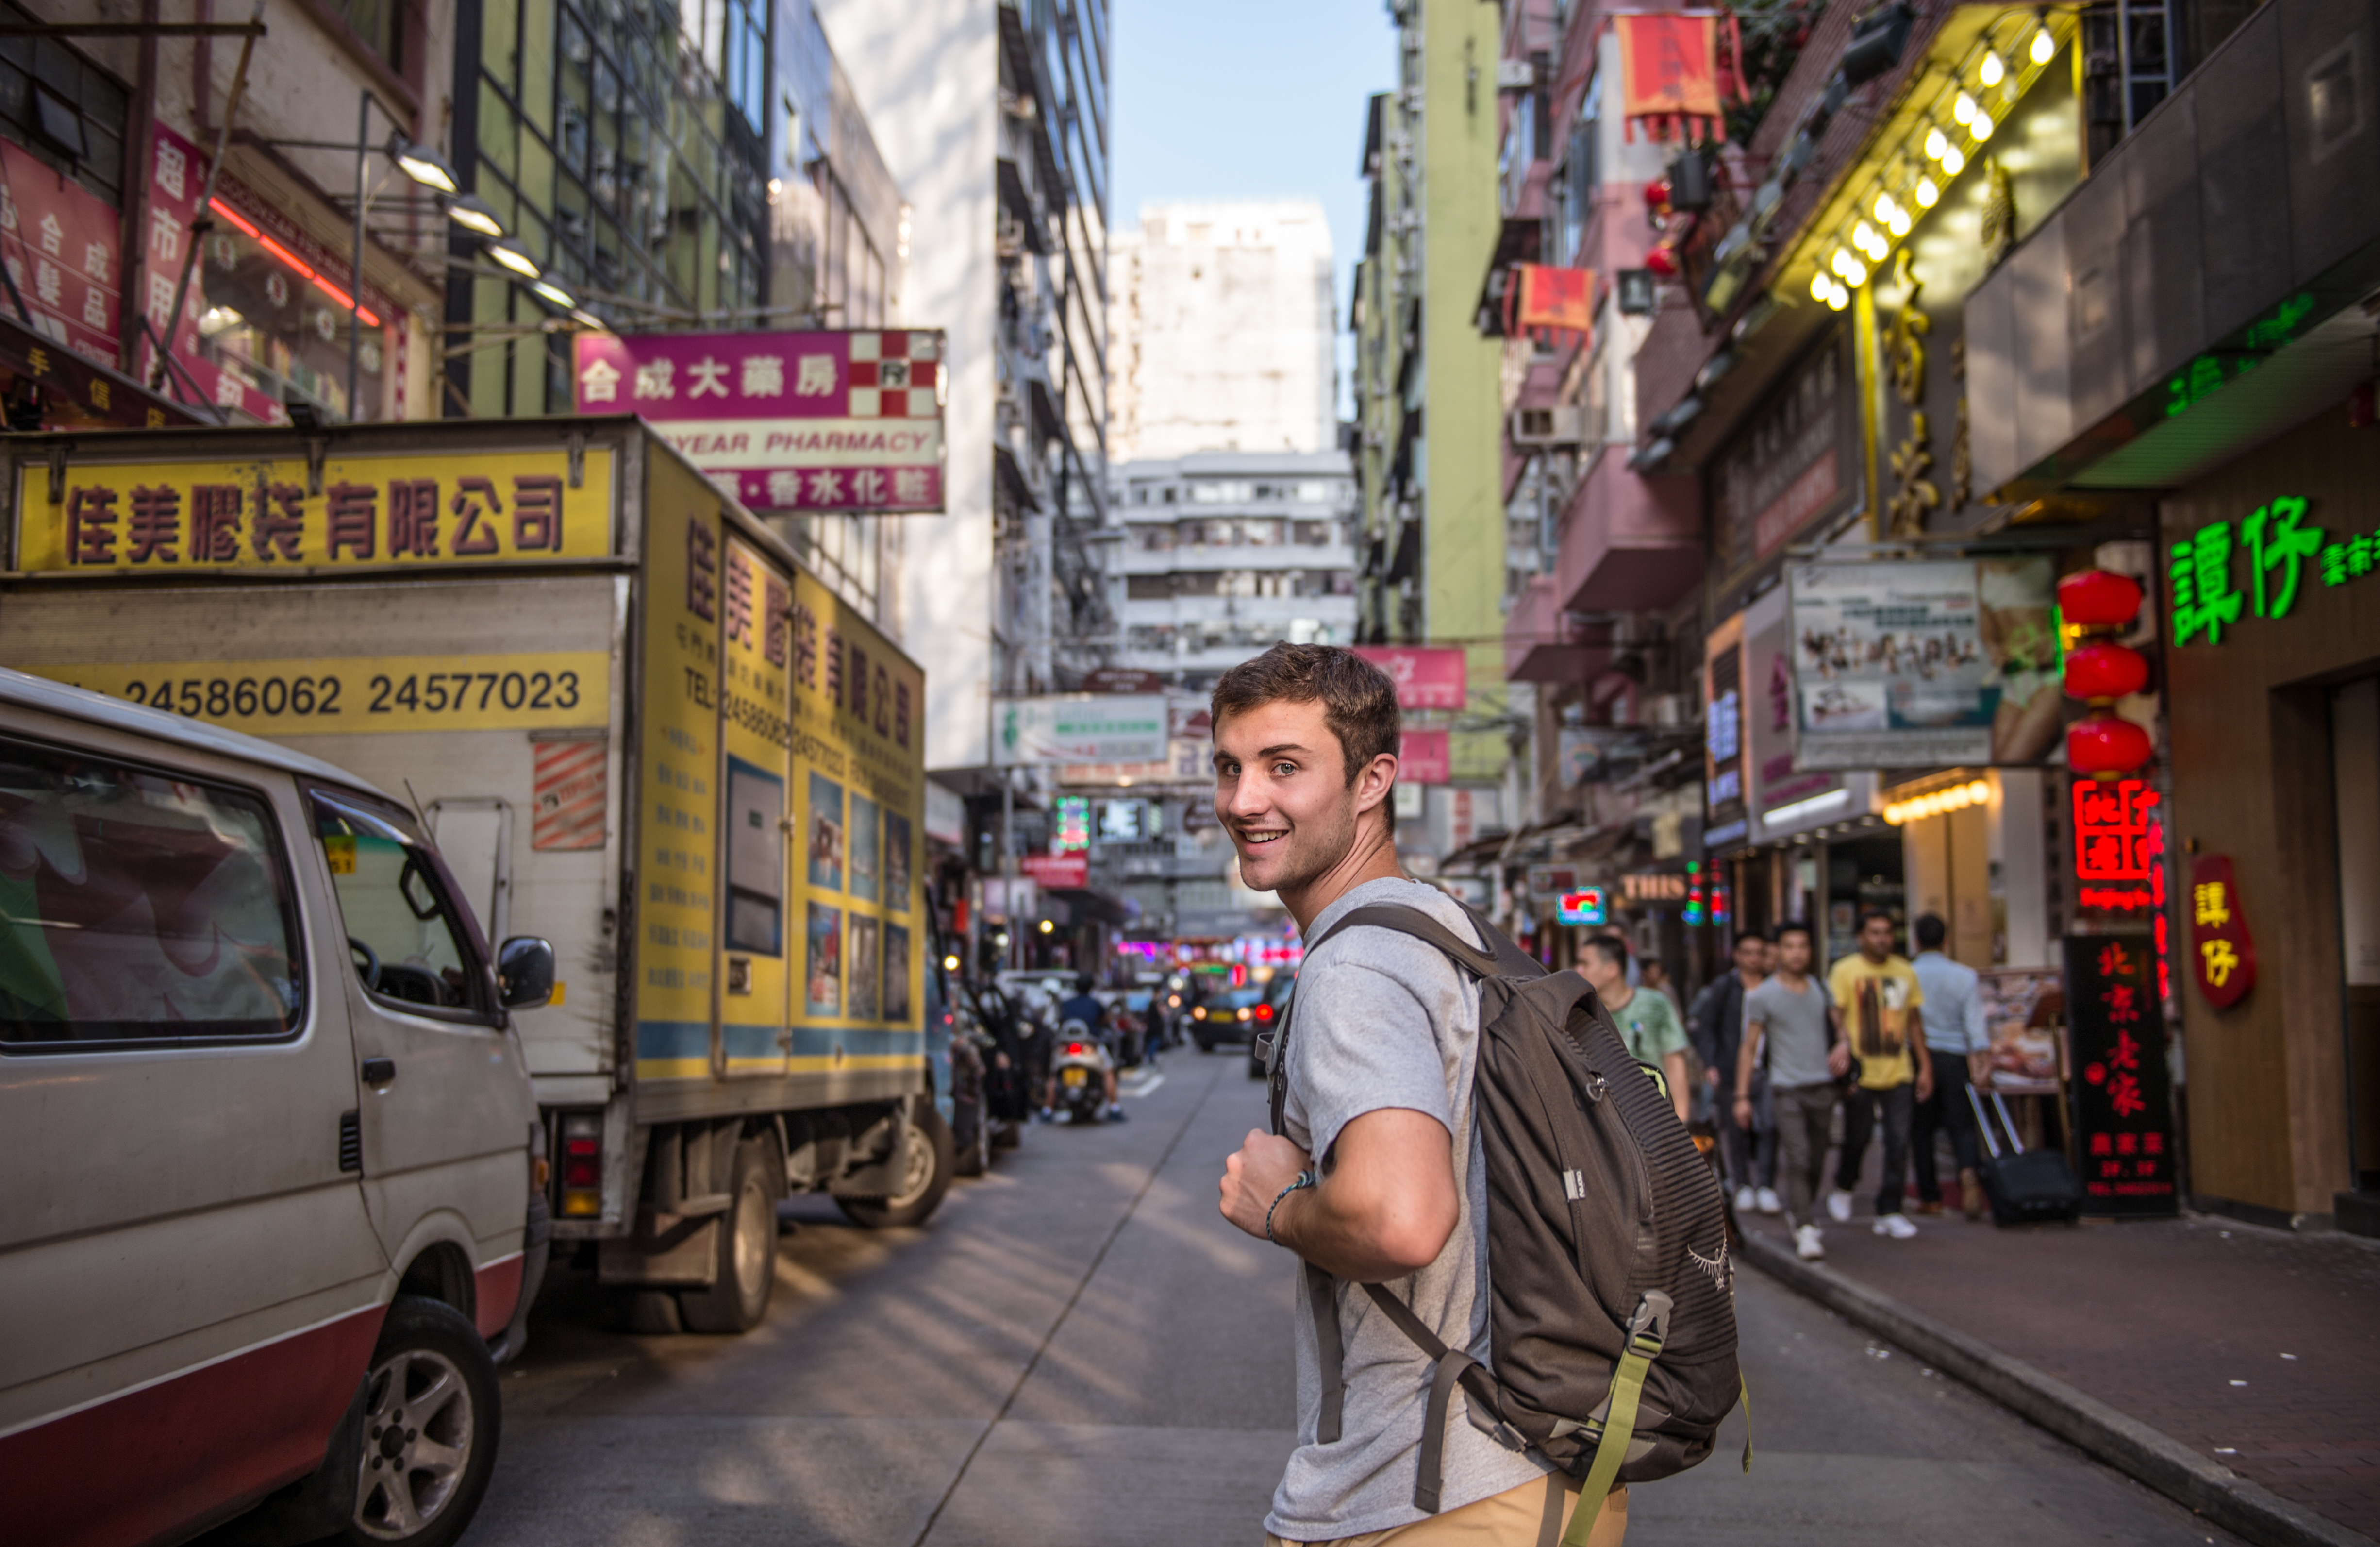 Cameron Halsted walks through the Ladies Market in Hong Kong.